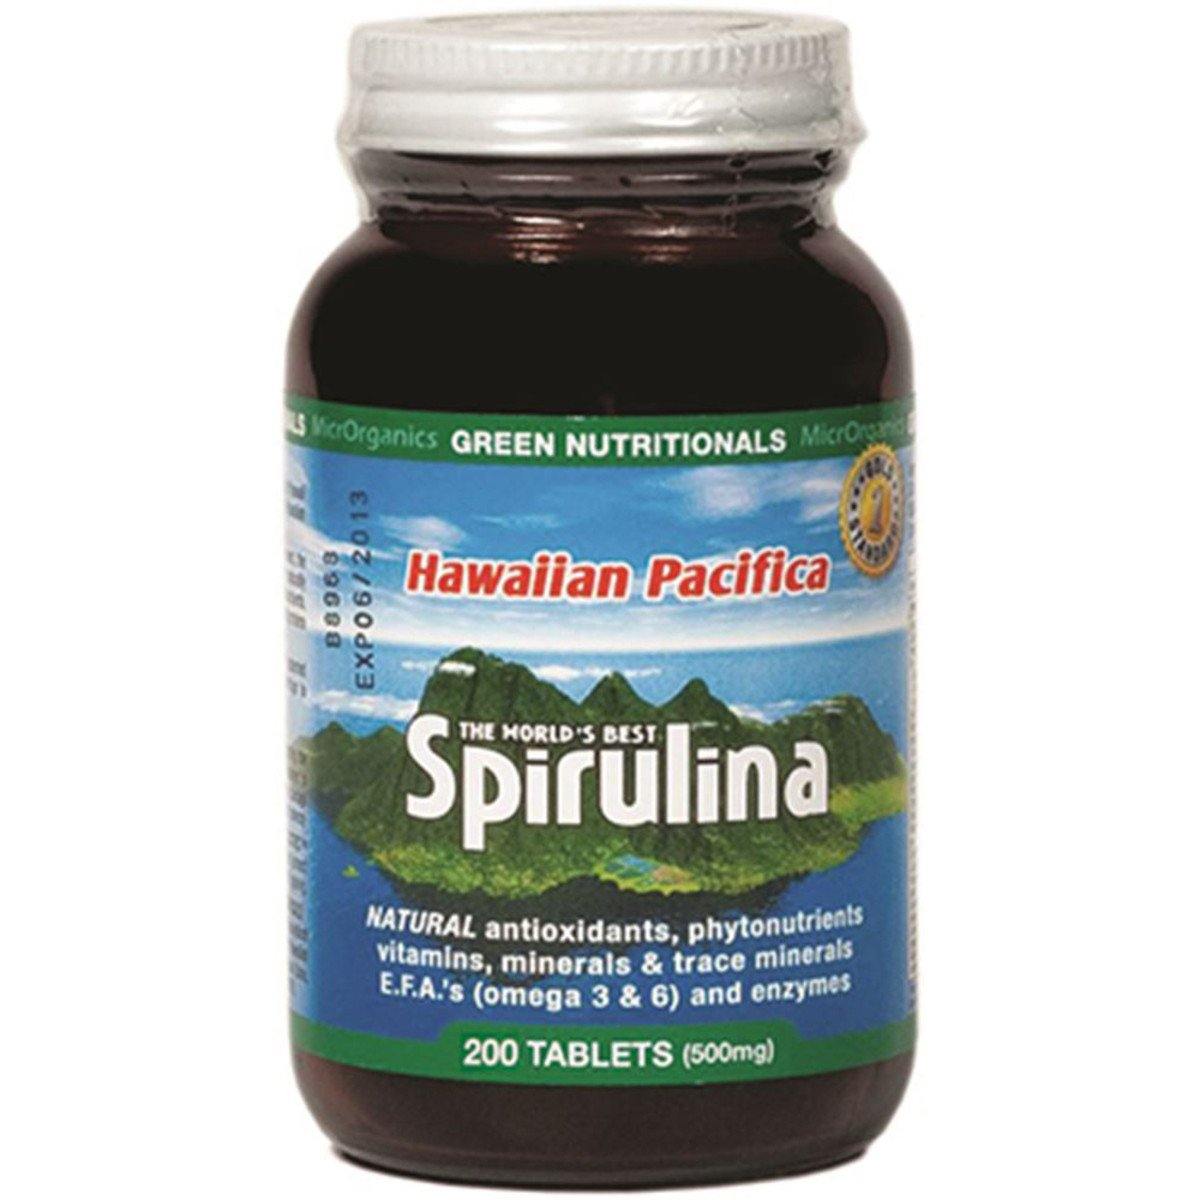 Green Nutritionals Hawaiian Pacifica Spirulina 500mg 200 Tablets - QVM Vitamins™